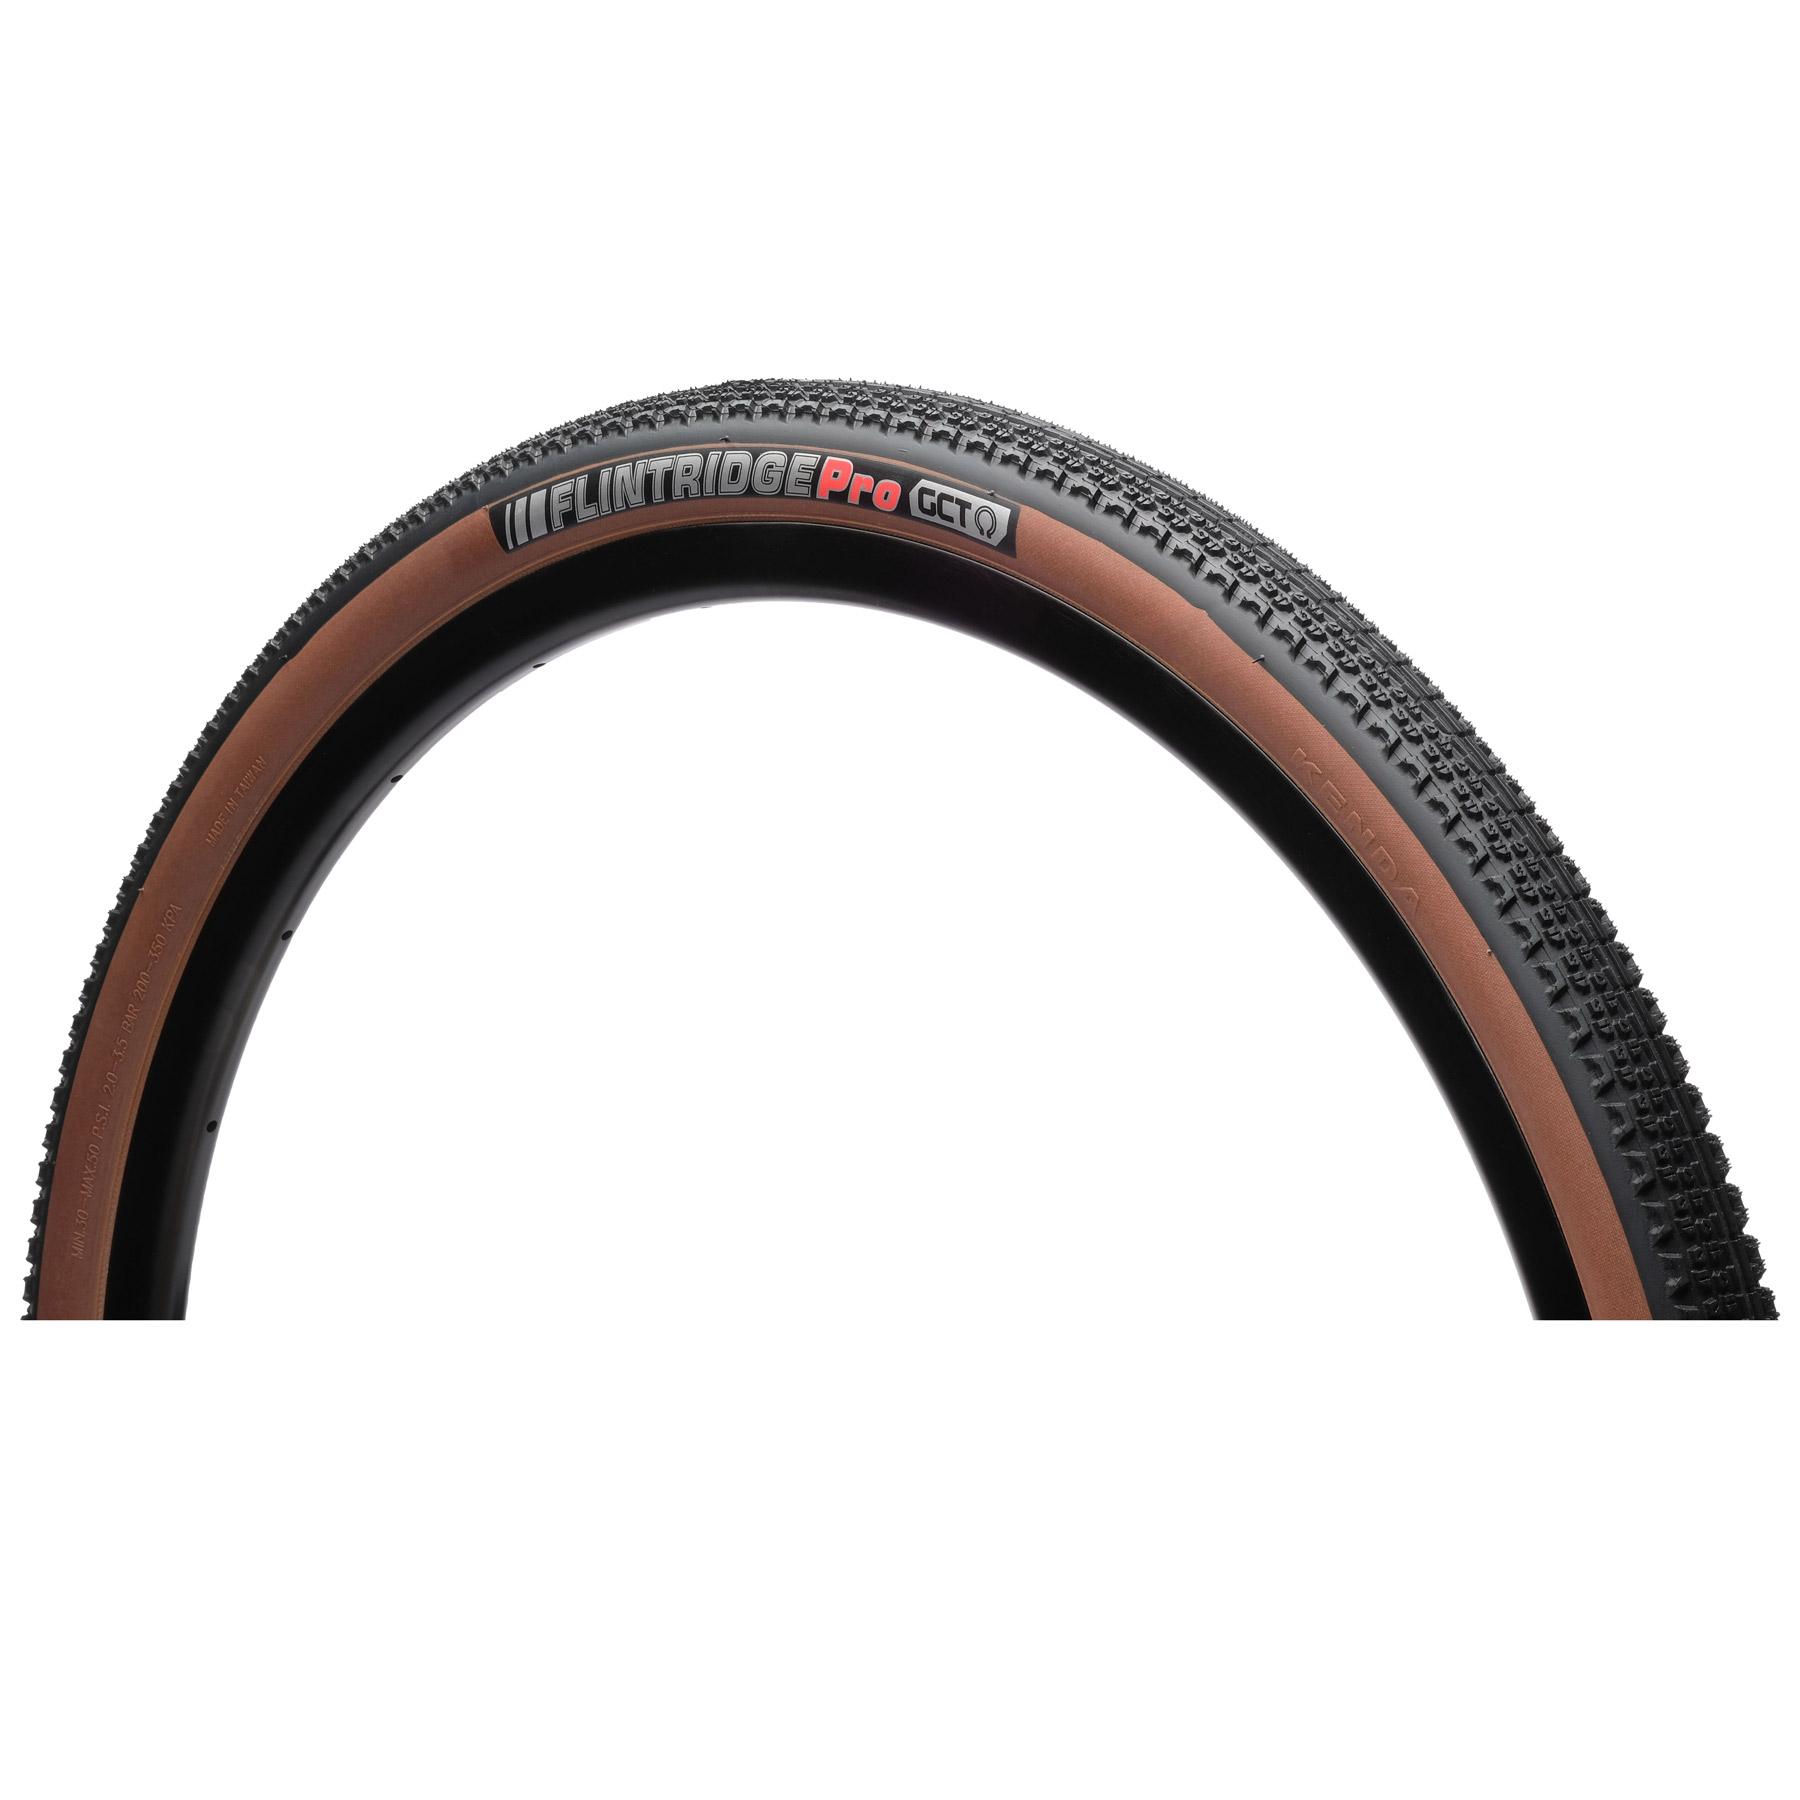 Picture of Kenda Flintridge Pro GCT Folding Tire - 40-622 - coffee skinwall